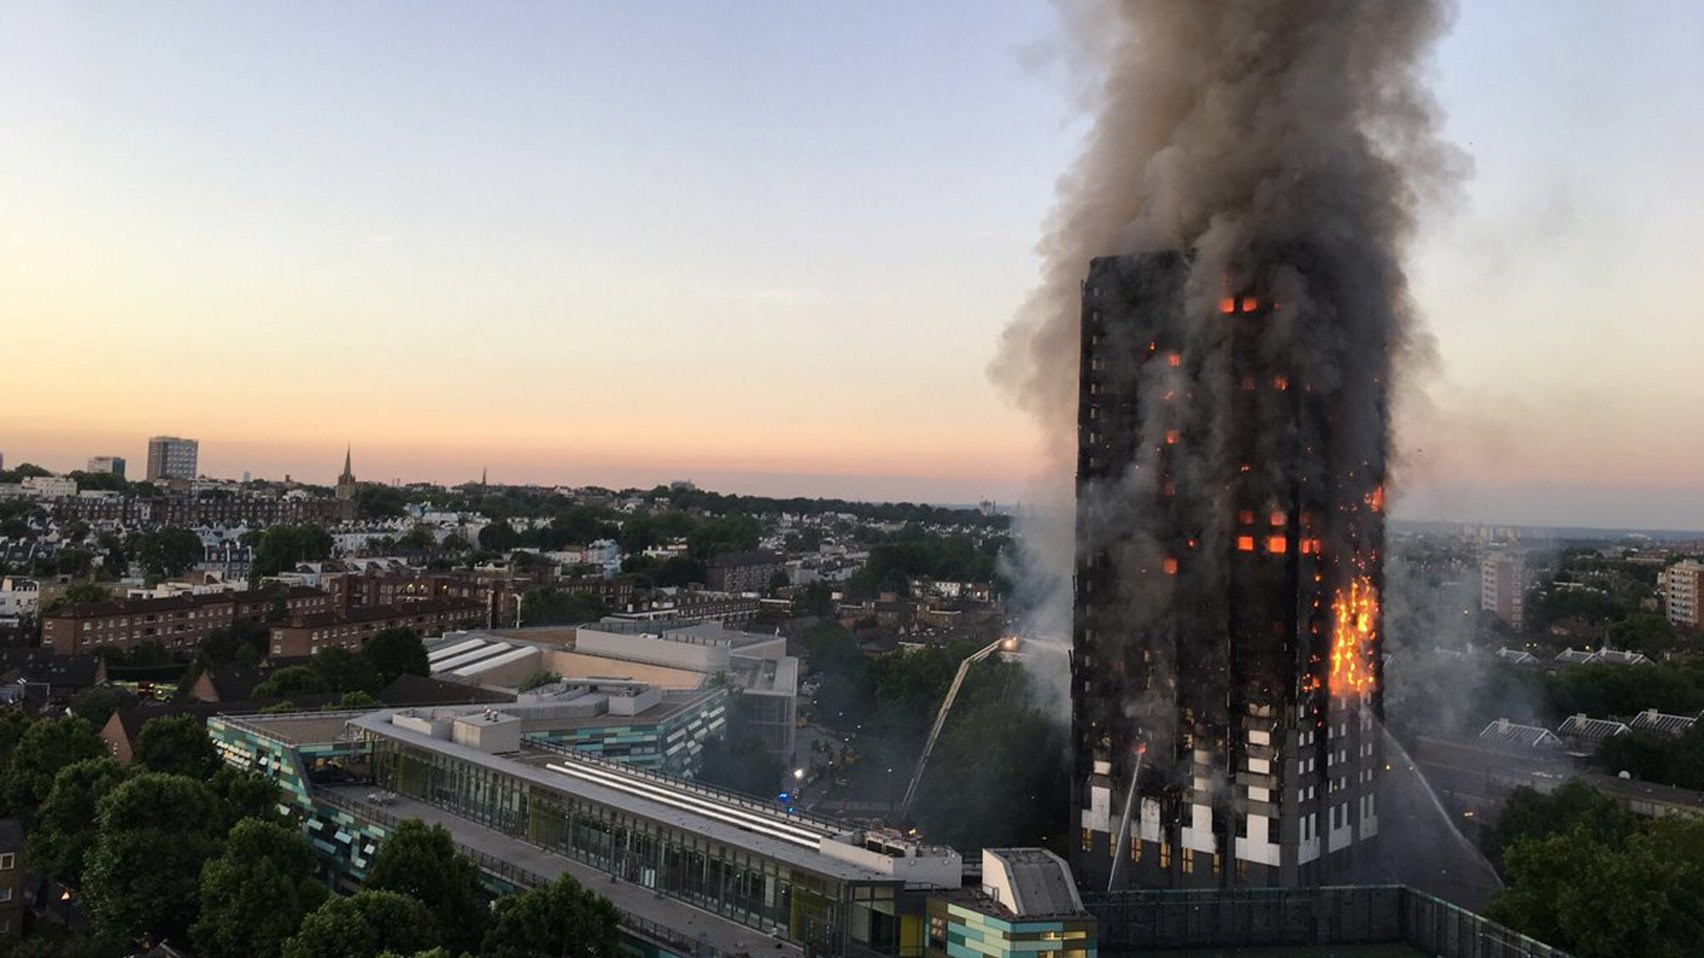 FT: Οι ασφαλιστικές εταιρείες είχαν προειδοποιήσει την βρετανική κυβέρνηση για τον κίνδυνο πυρκαγιάς σε ουρανοξύστες